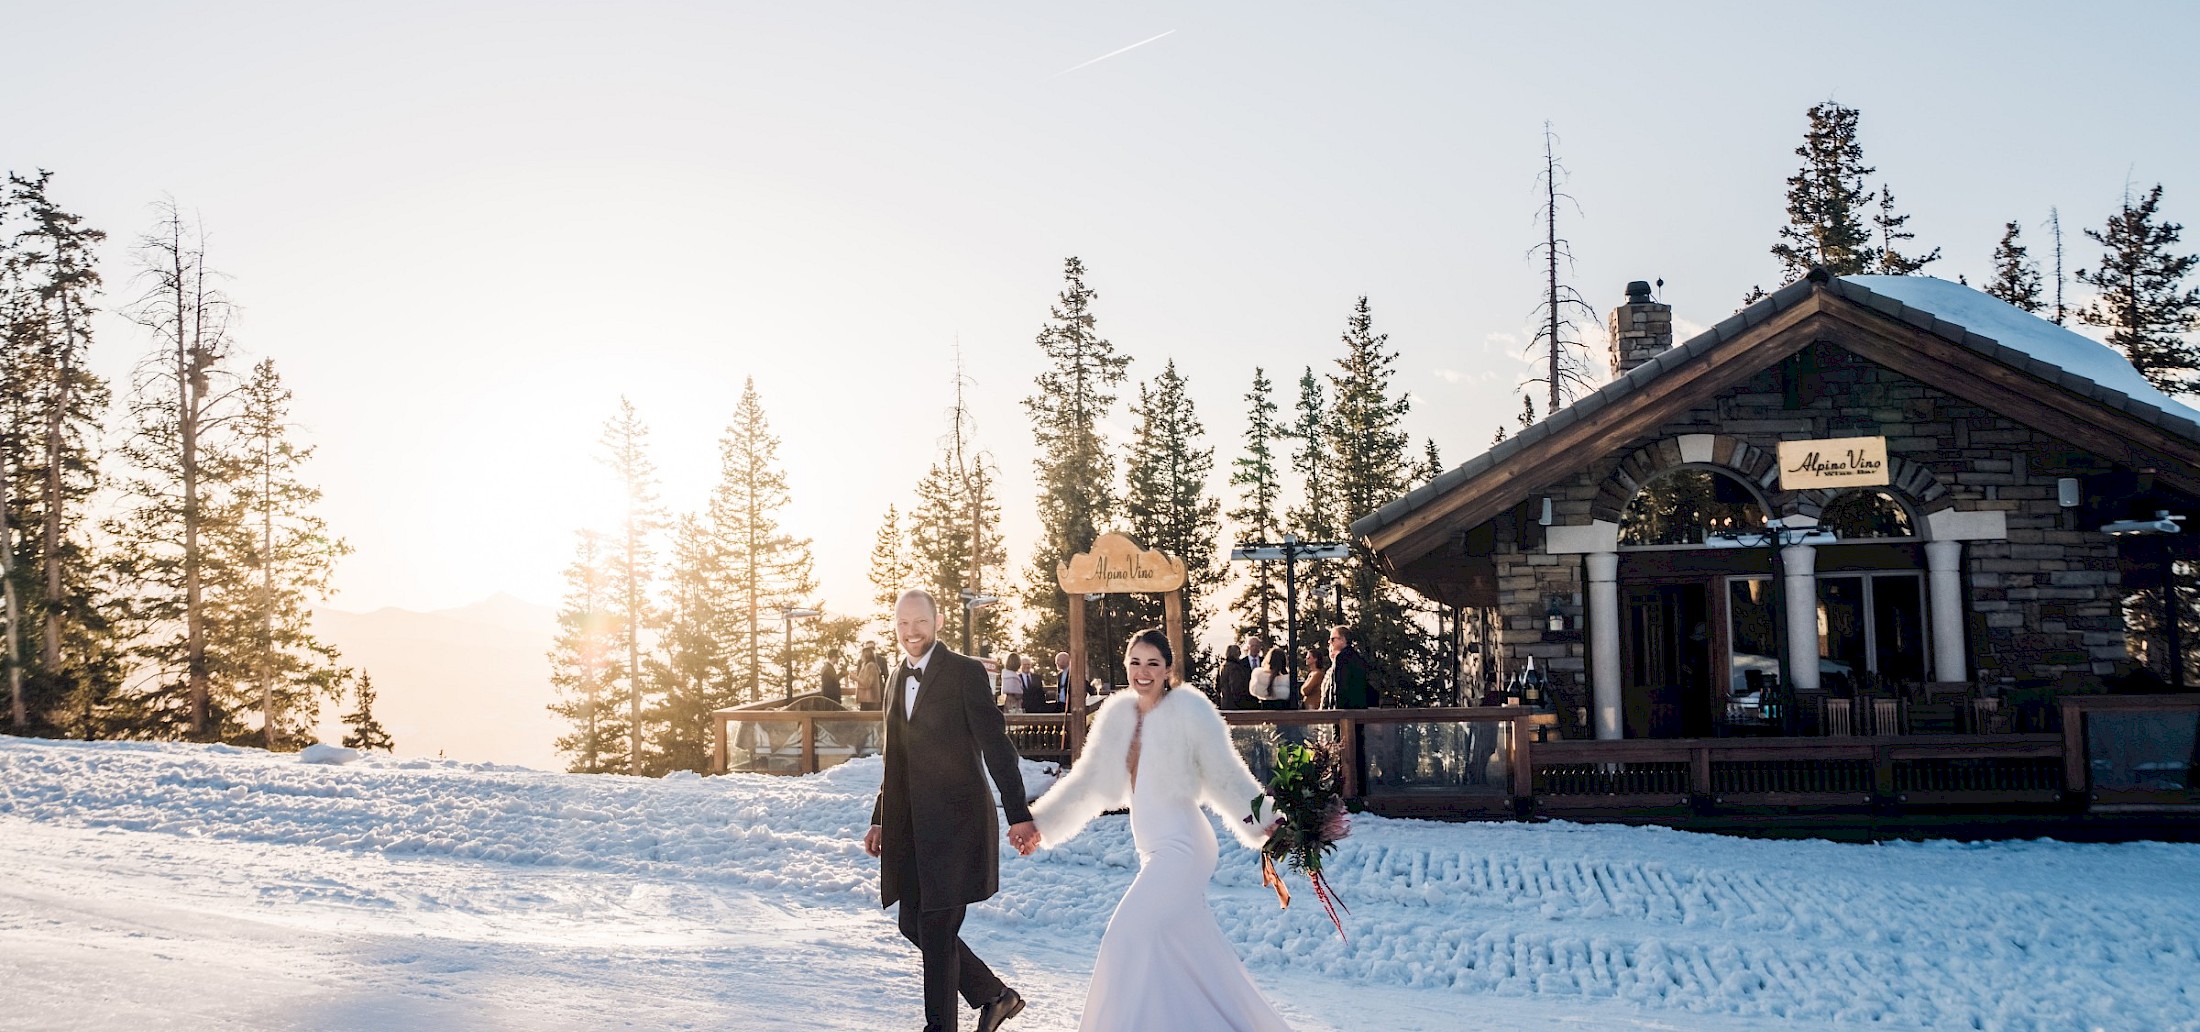 A Telluride Celebration: The Wedding of Alex and Claire Was a Dream Come True